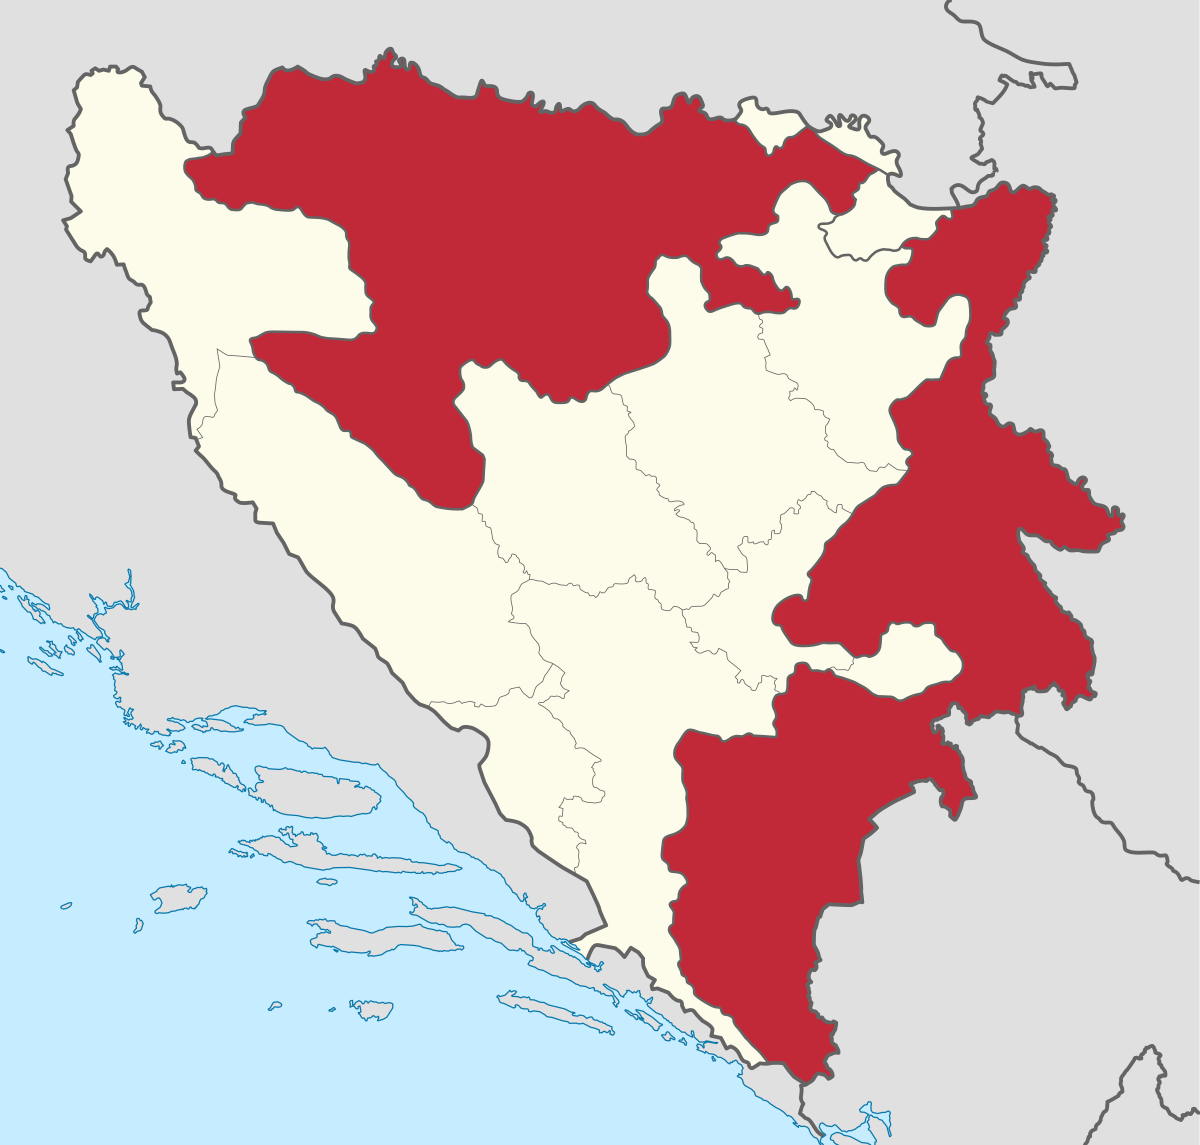 Сербия и республика сербская на карте. Карта Боснии и Герцеговины и Республика Сербская. Республика Сербская Боснии и Герцеговины и Сербия. Сербия Республика Сербская и Республика Сербская Краина. Сербия и Республика Сербская в Боснии и Герцеговине карта.